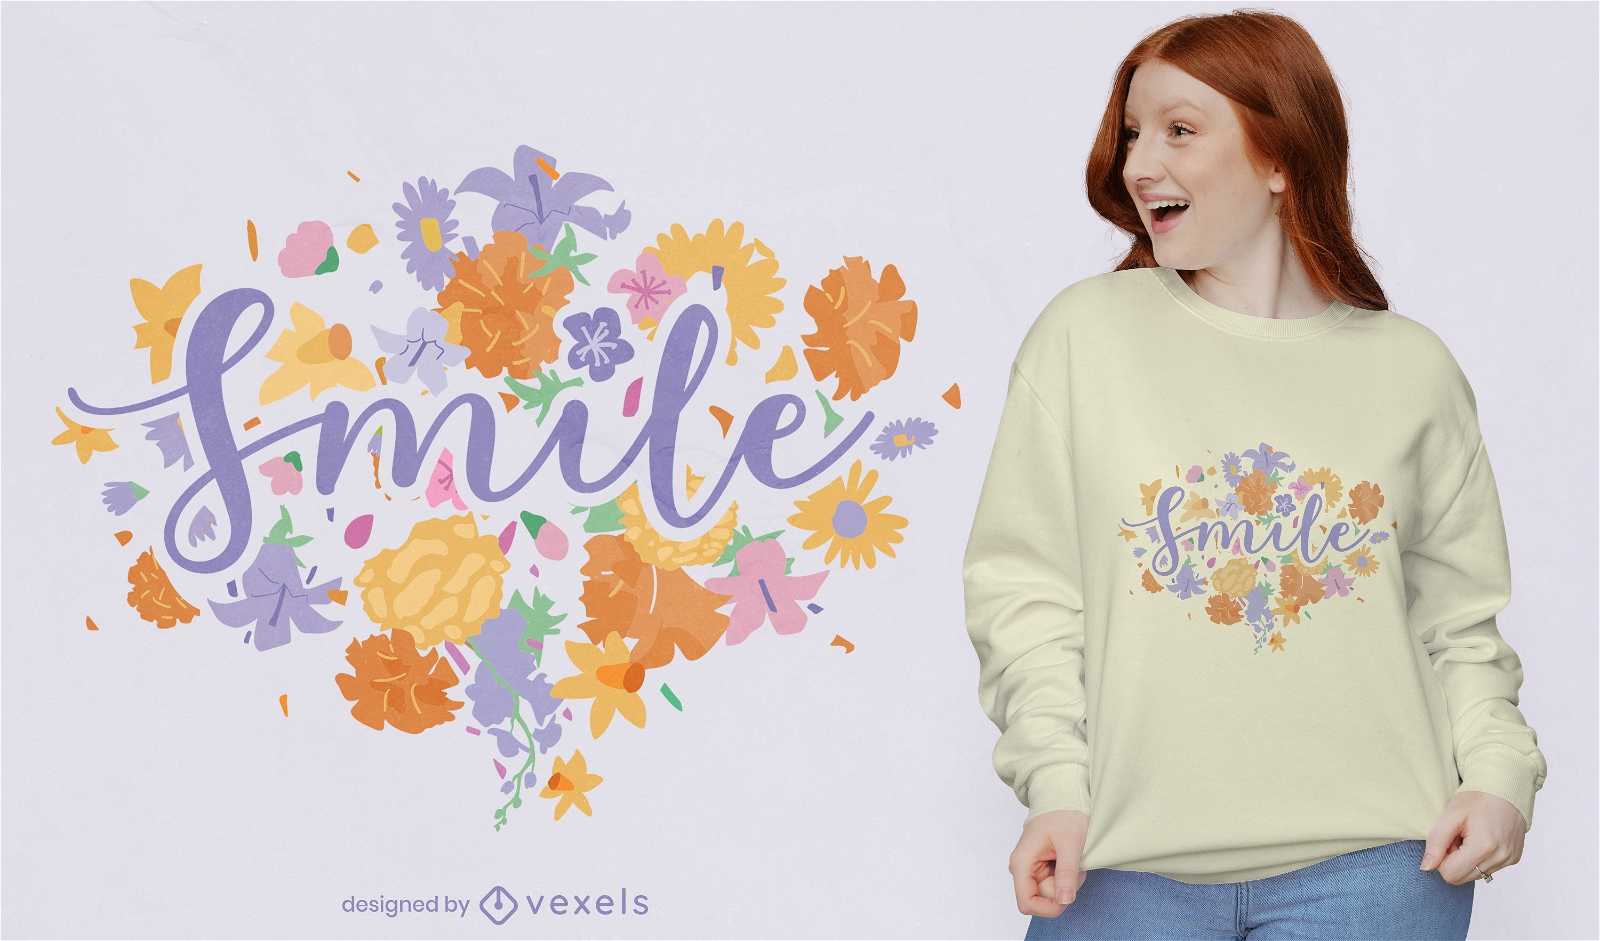 Sorriso com design floral de camiseta